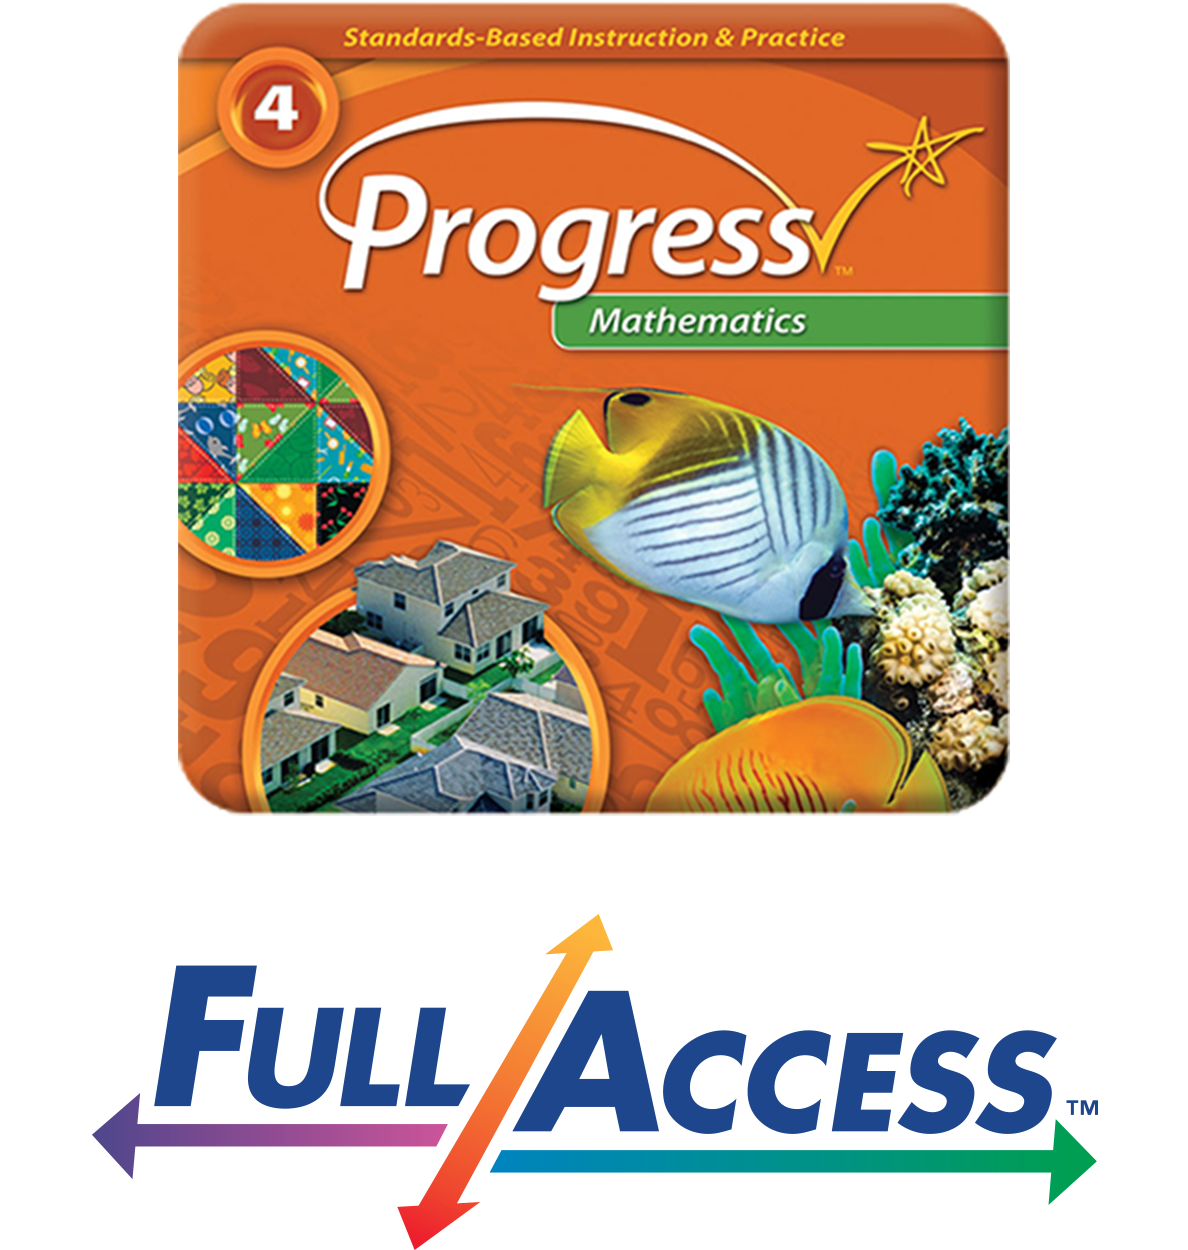 Progress Mathematics Full Access Bundle